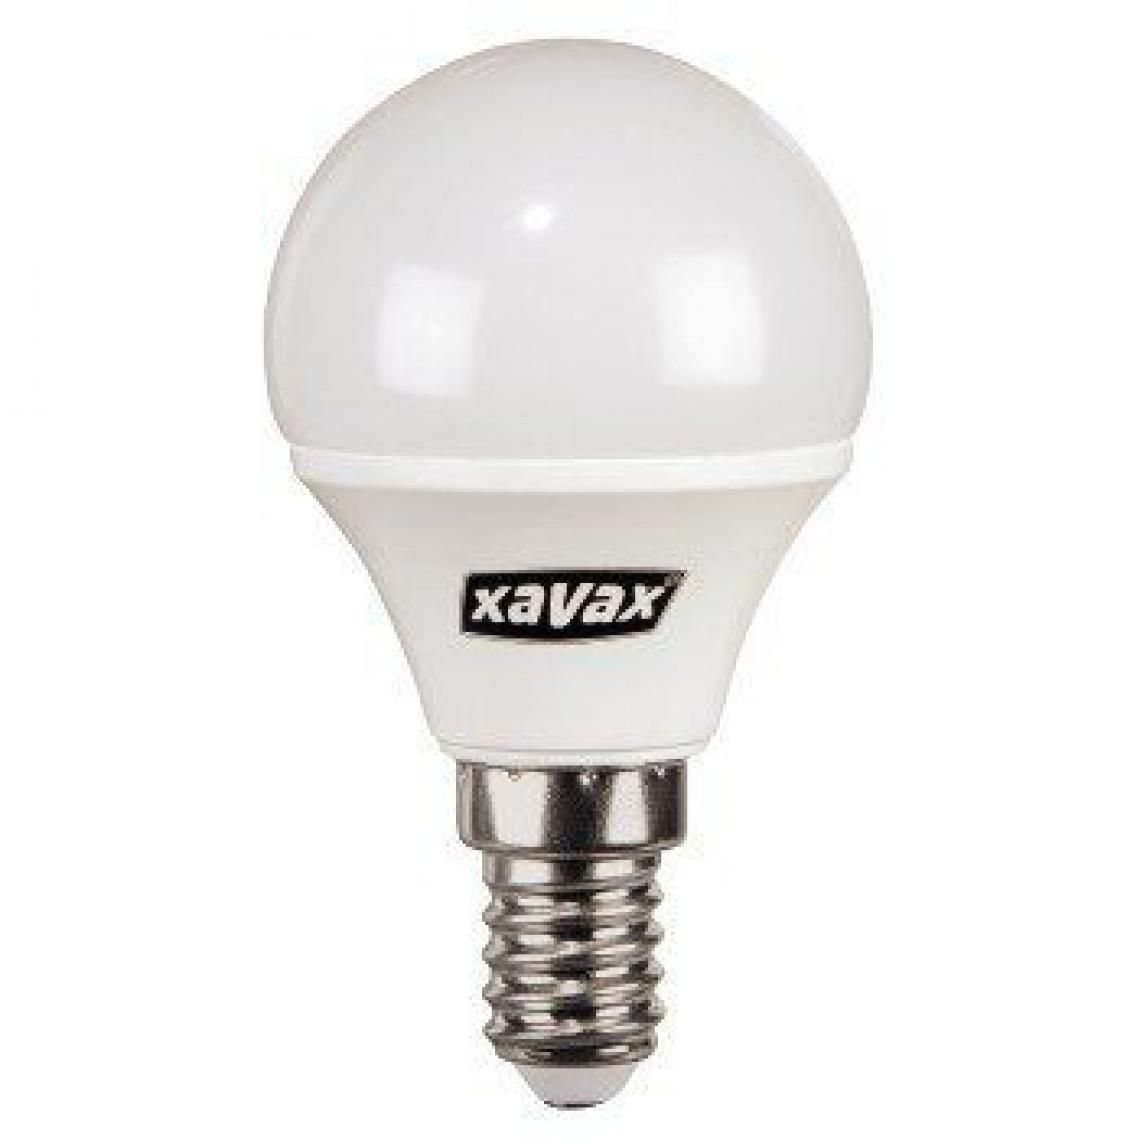 Delos - Hama 00112184 energy-saving lamp - Ampoules LED